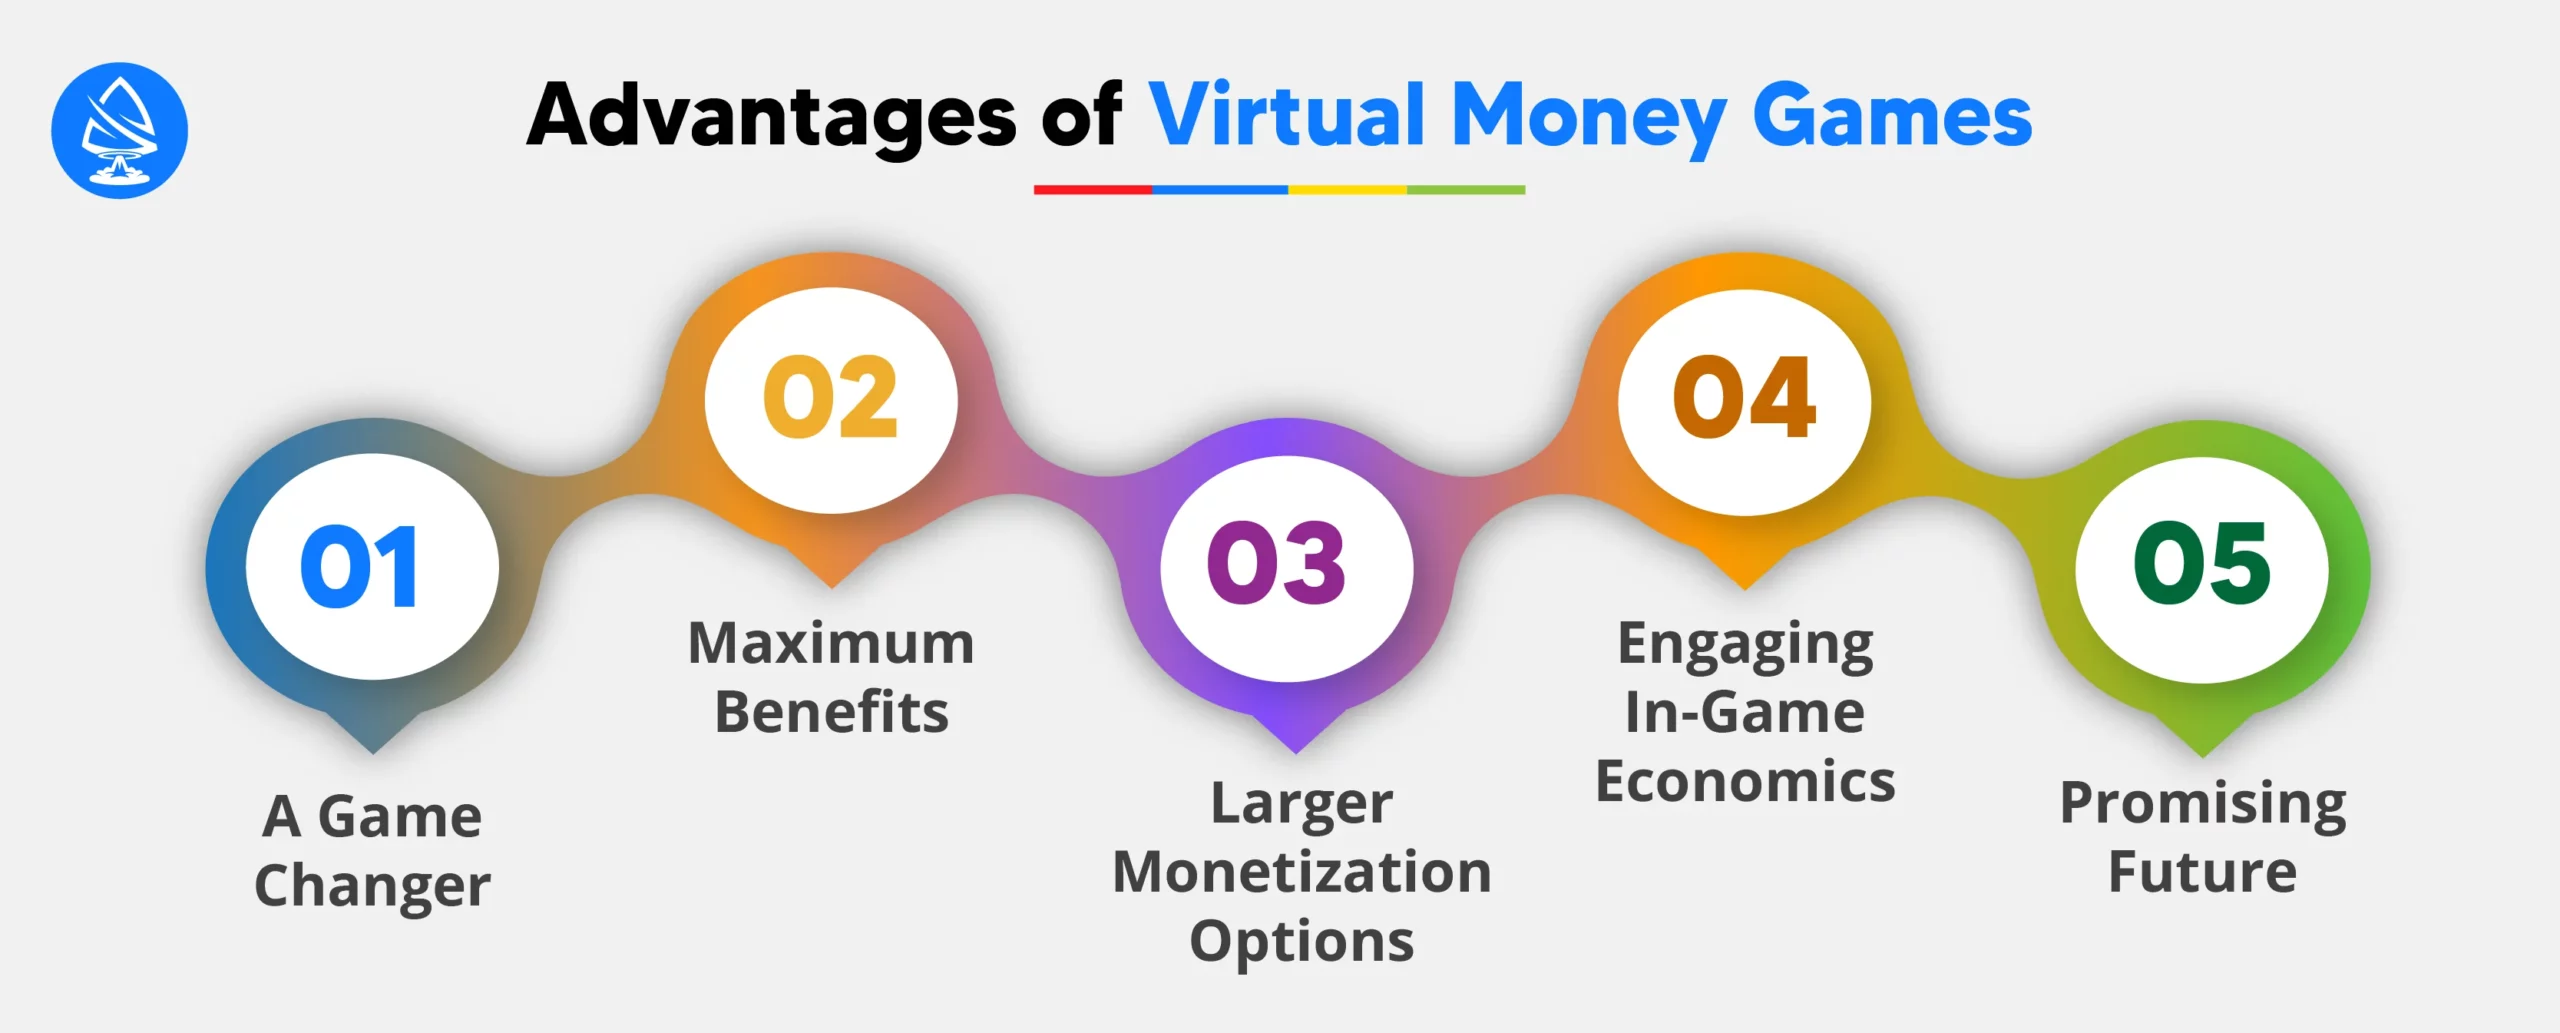 Advantages of Virtual Money Games